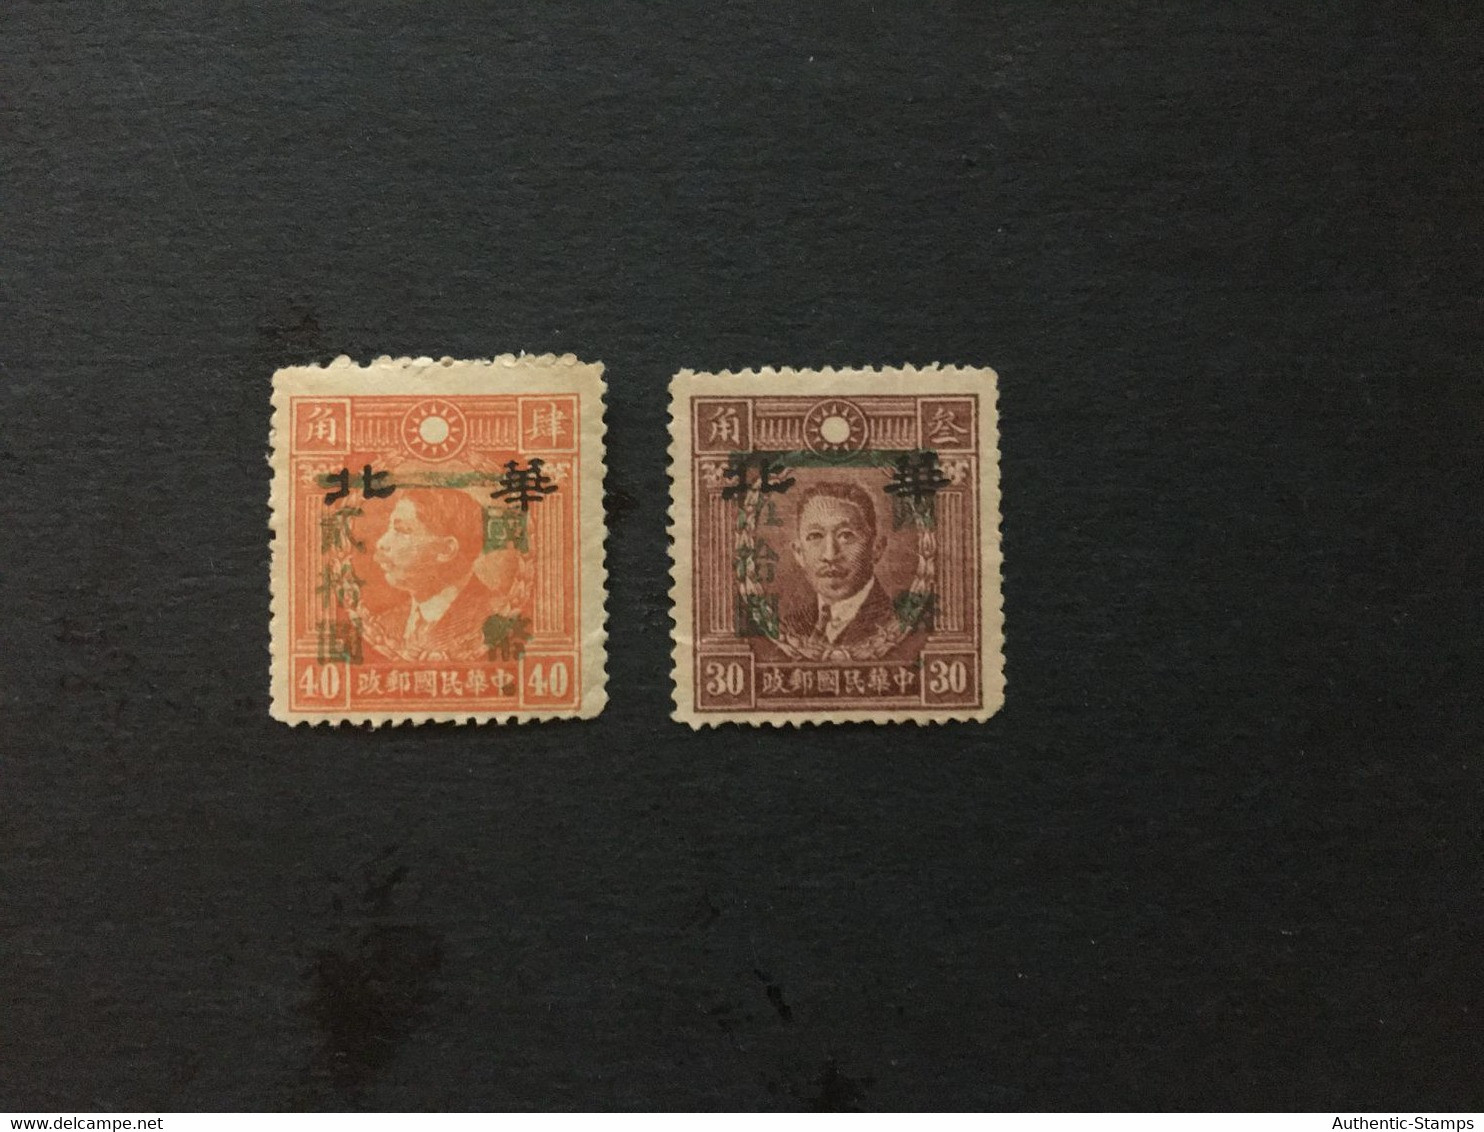 CHINA Local Stamp SET, Unused, RARE OVERPRINT, Japanese OCCUPATION, CINA, CHINE,  LIST 263 - 1941-45 Northern China